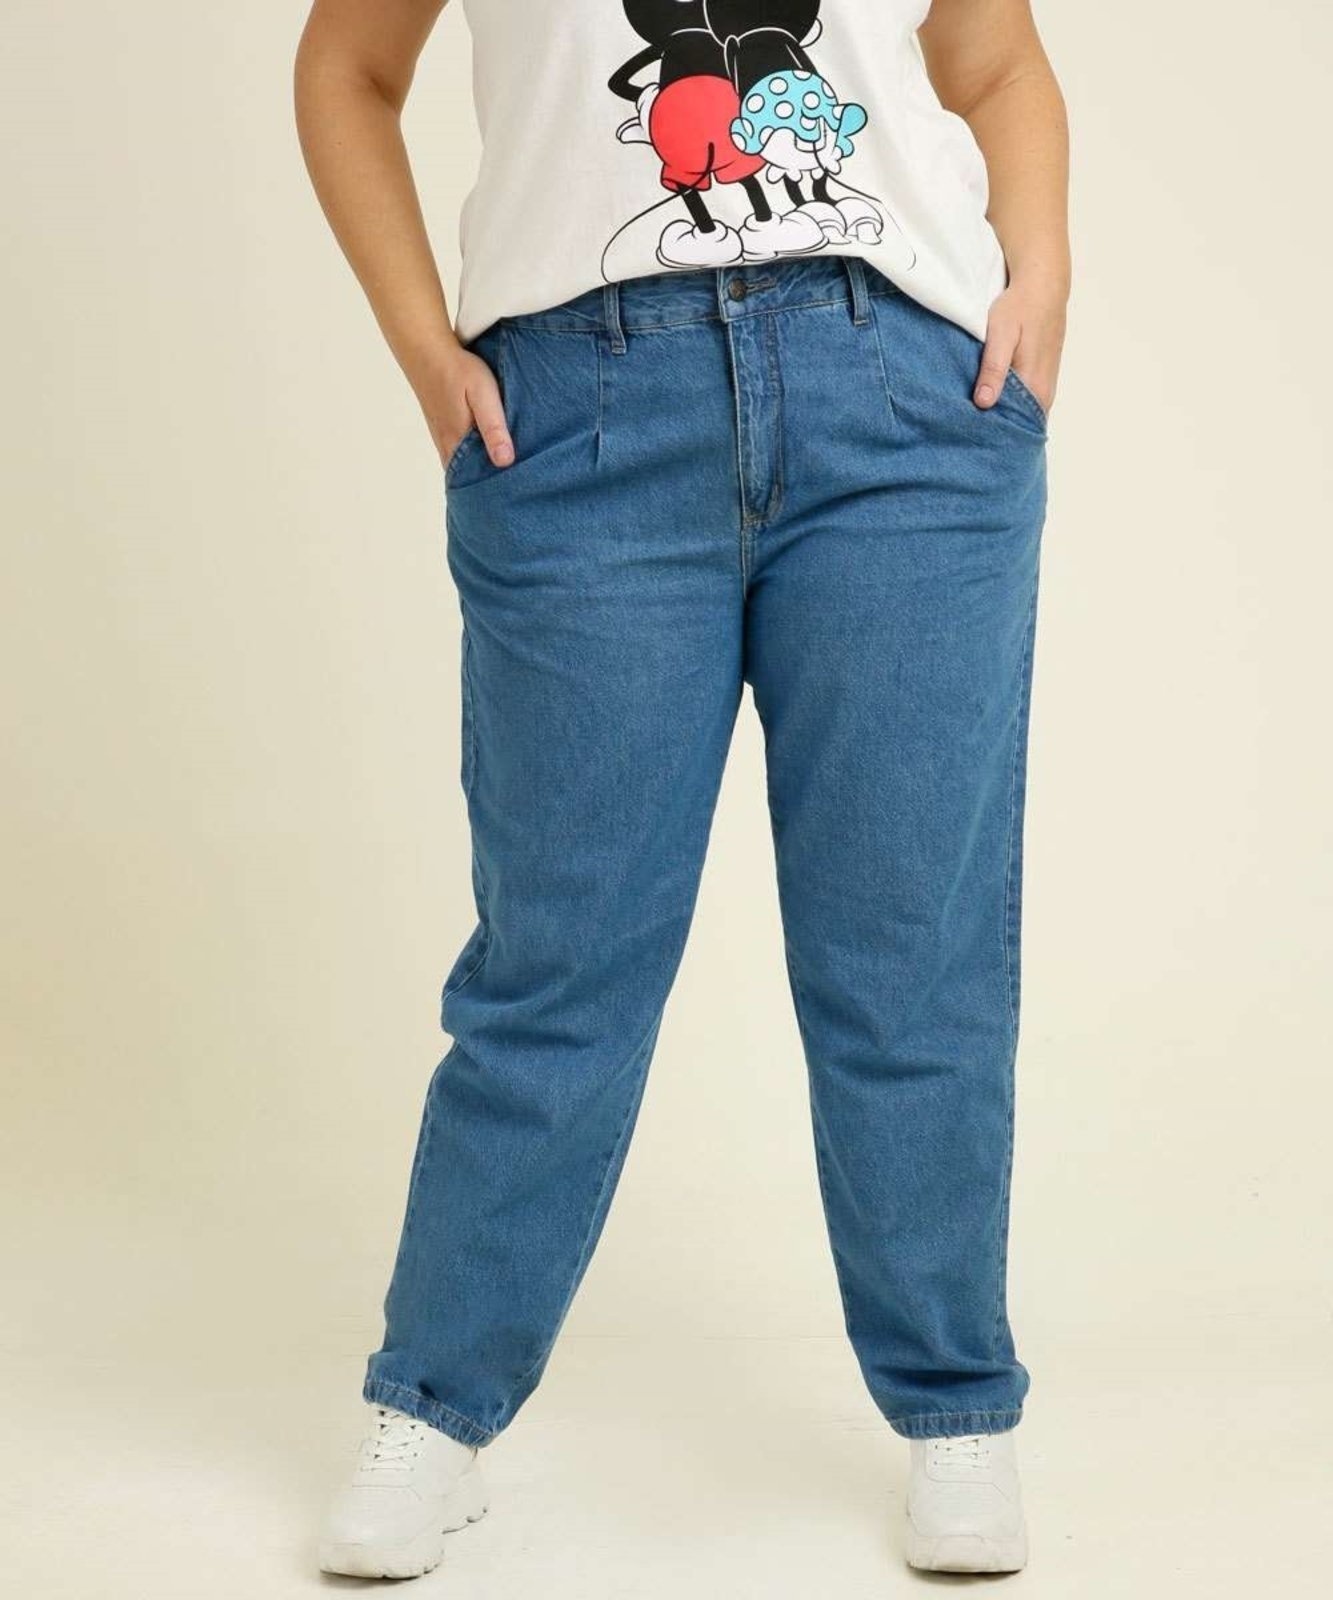 Calça Plus Size Feminina Mom Jeans Marisa